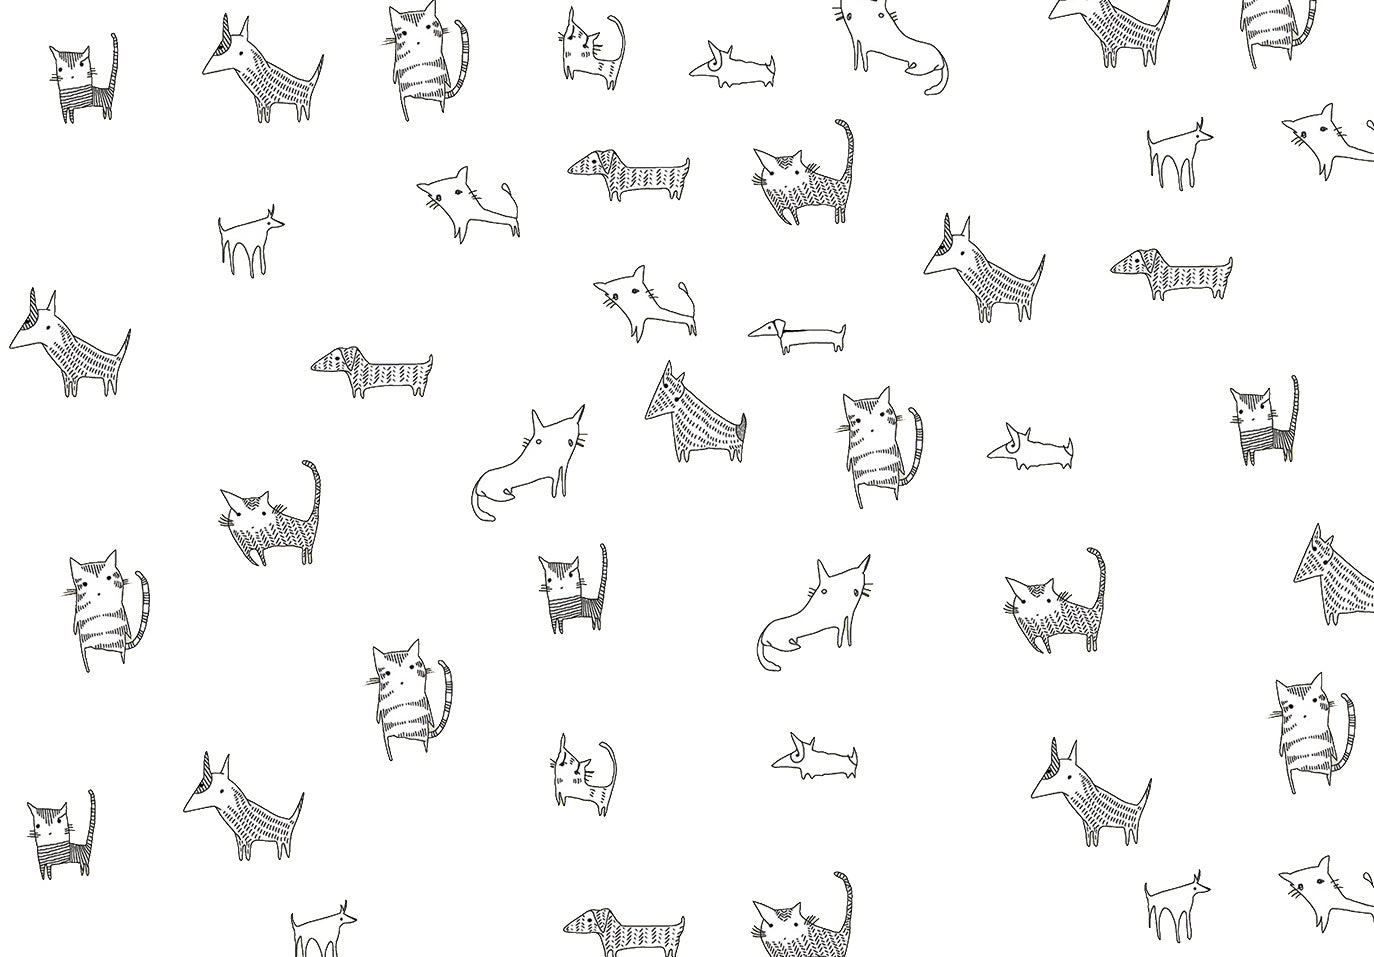 CATS & DOGS WALLPAPER Illustration by Deniz Yeğin İkiışık